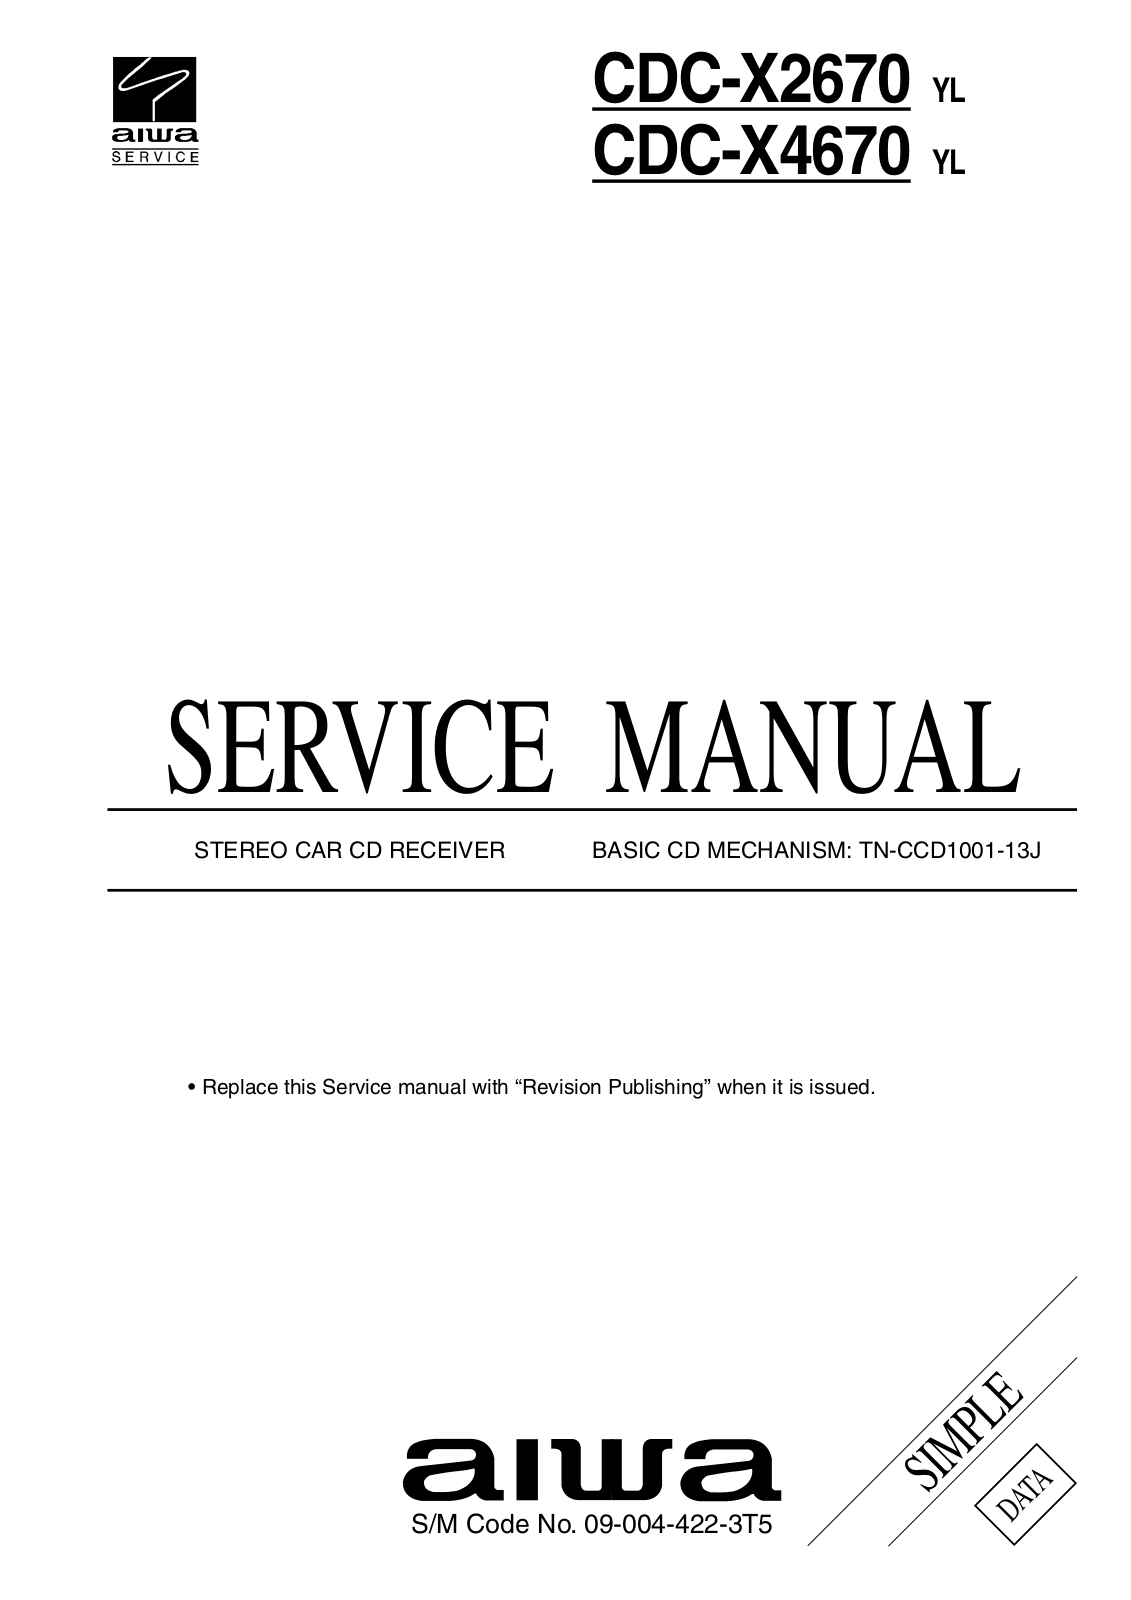 AIWA CDC-X2670, CDC-X4670 Service Manual